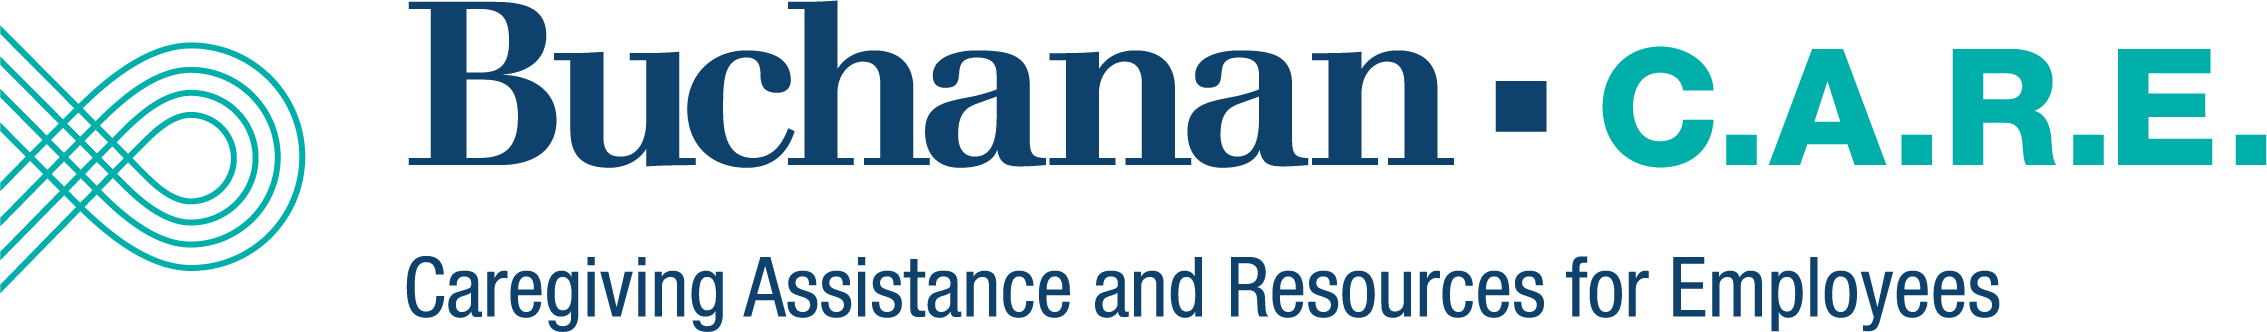 Buchanan C.A.R.E. Logo